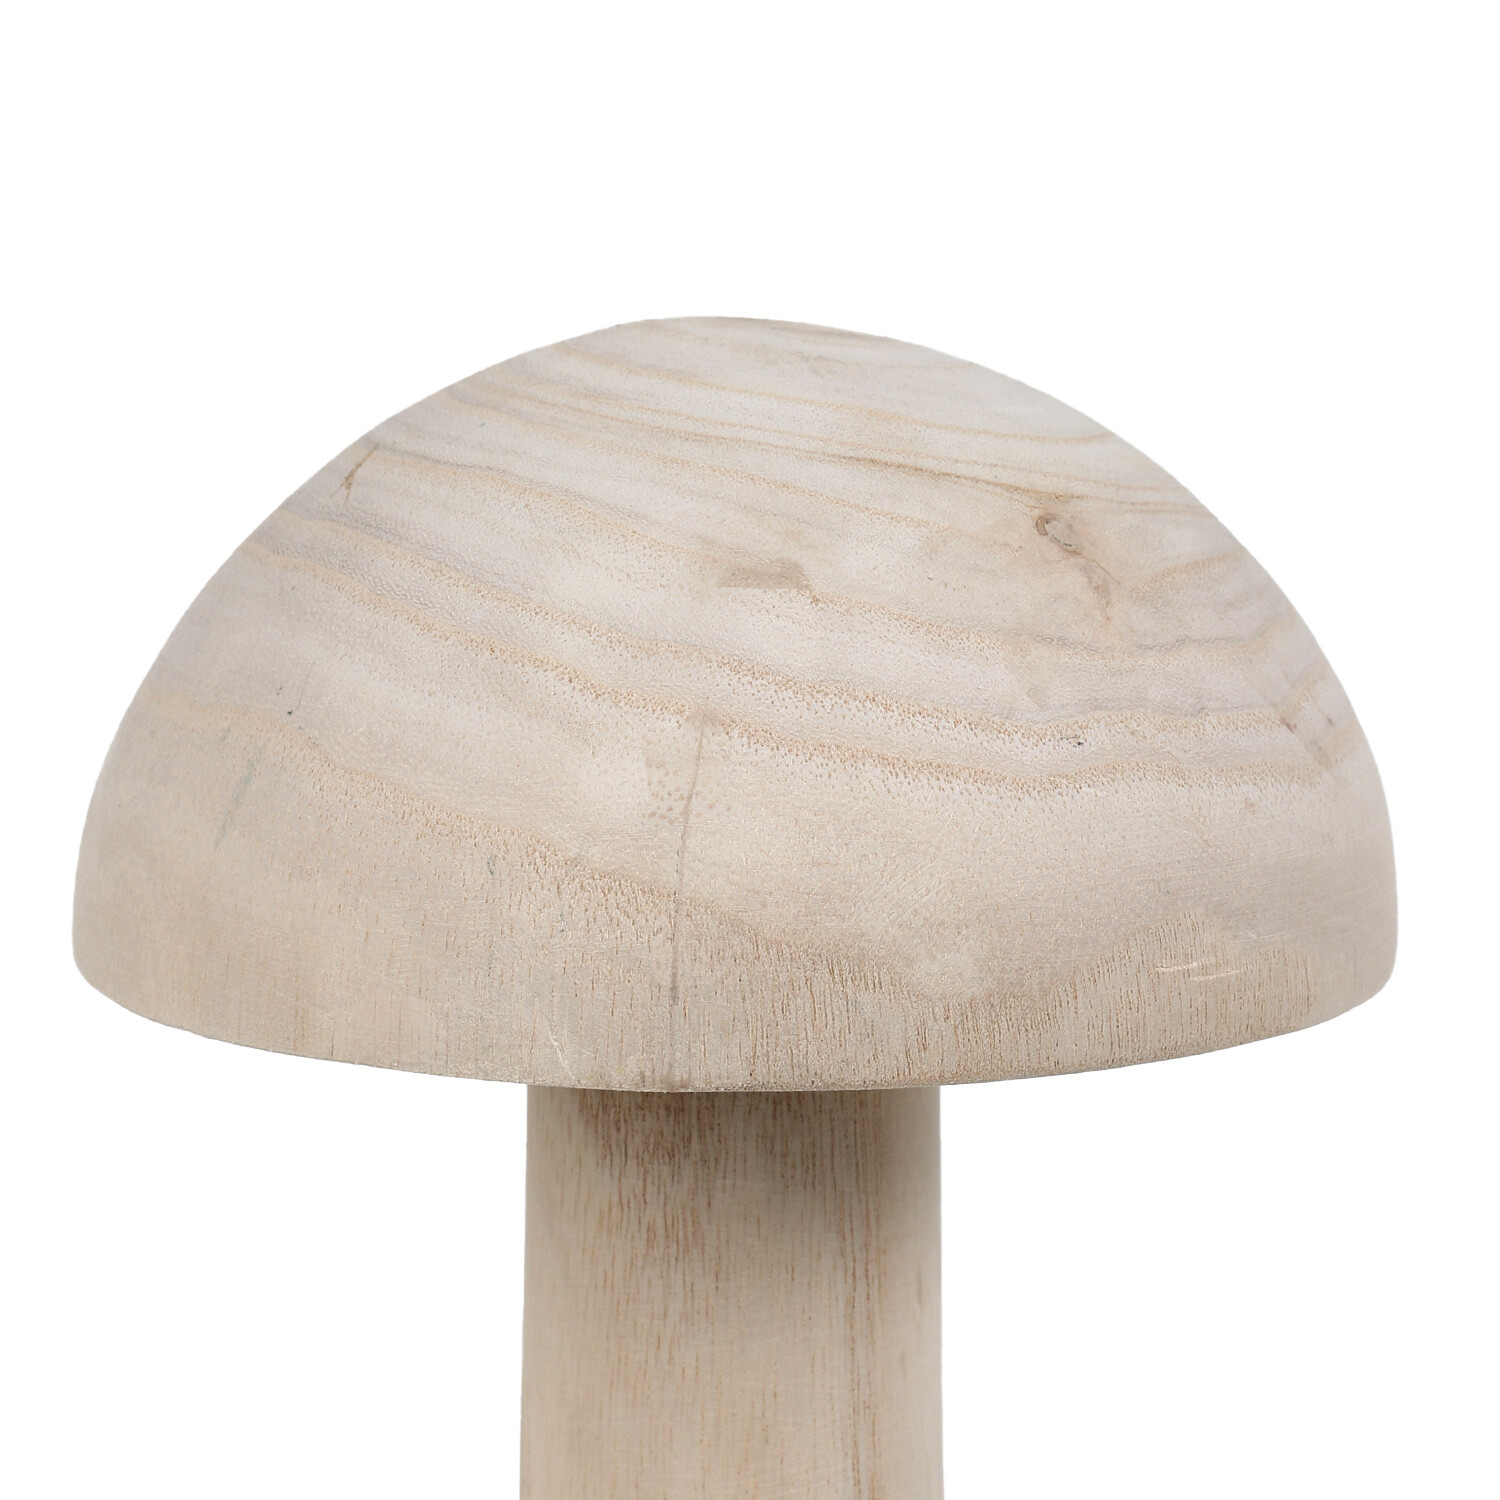 Wooden Mushroom Ornament - Natural Image 2